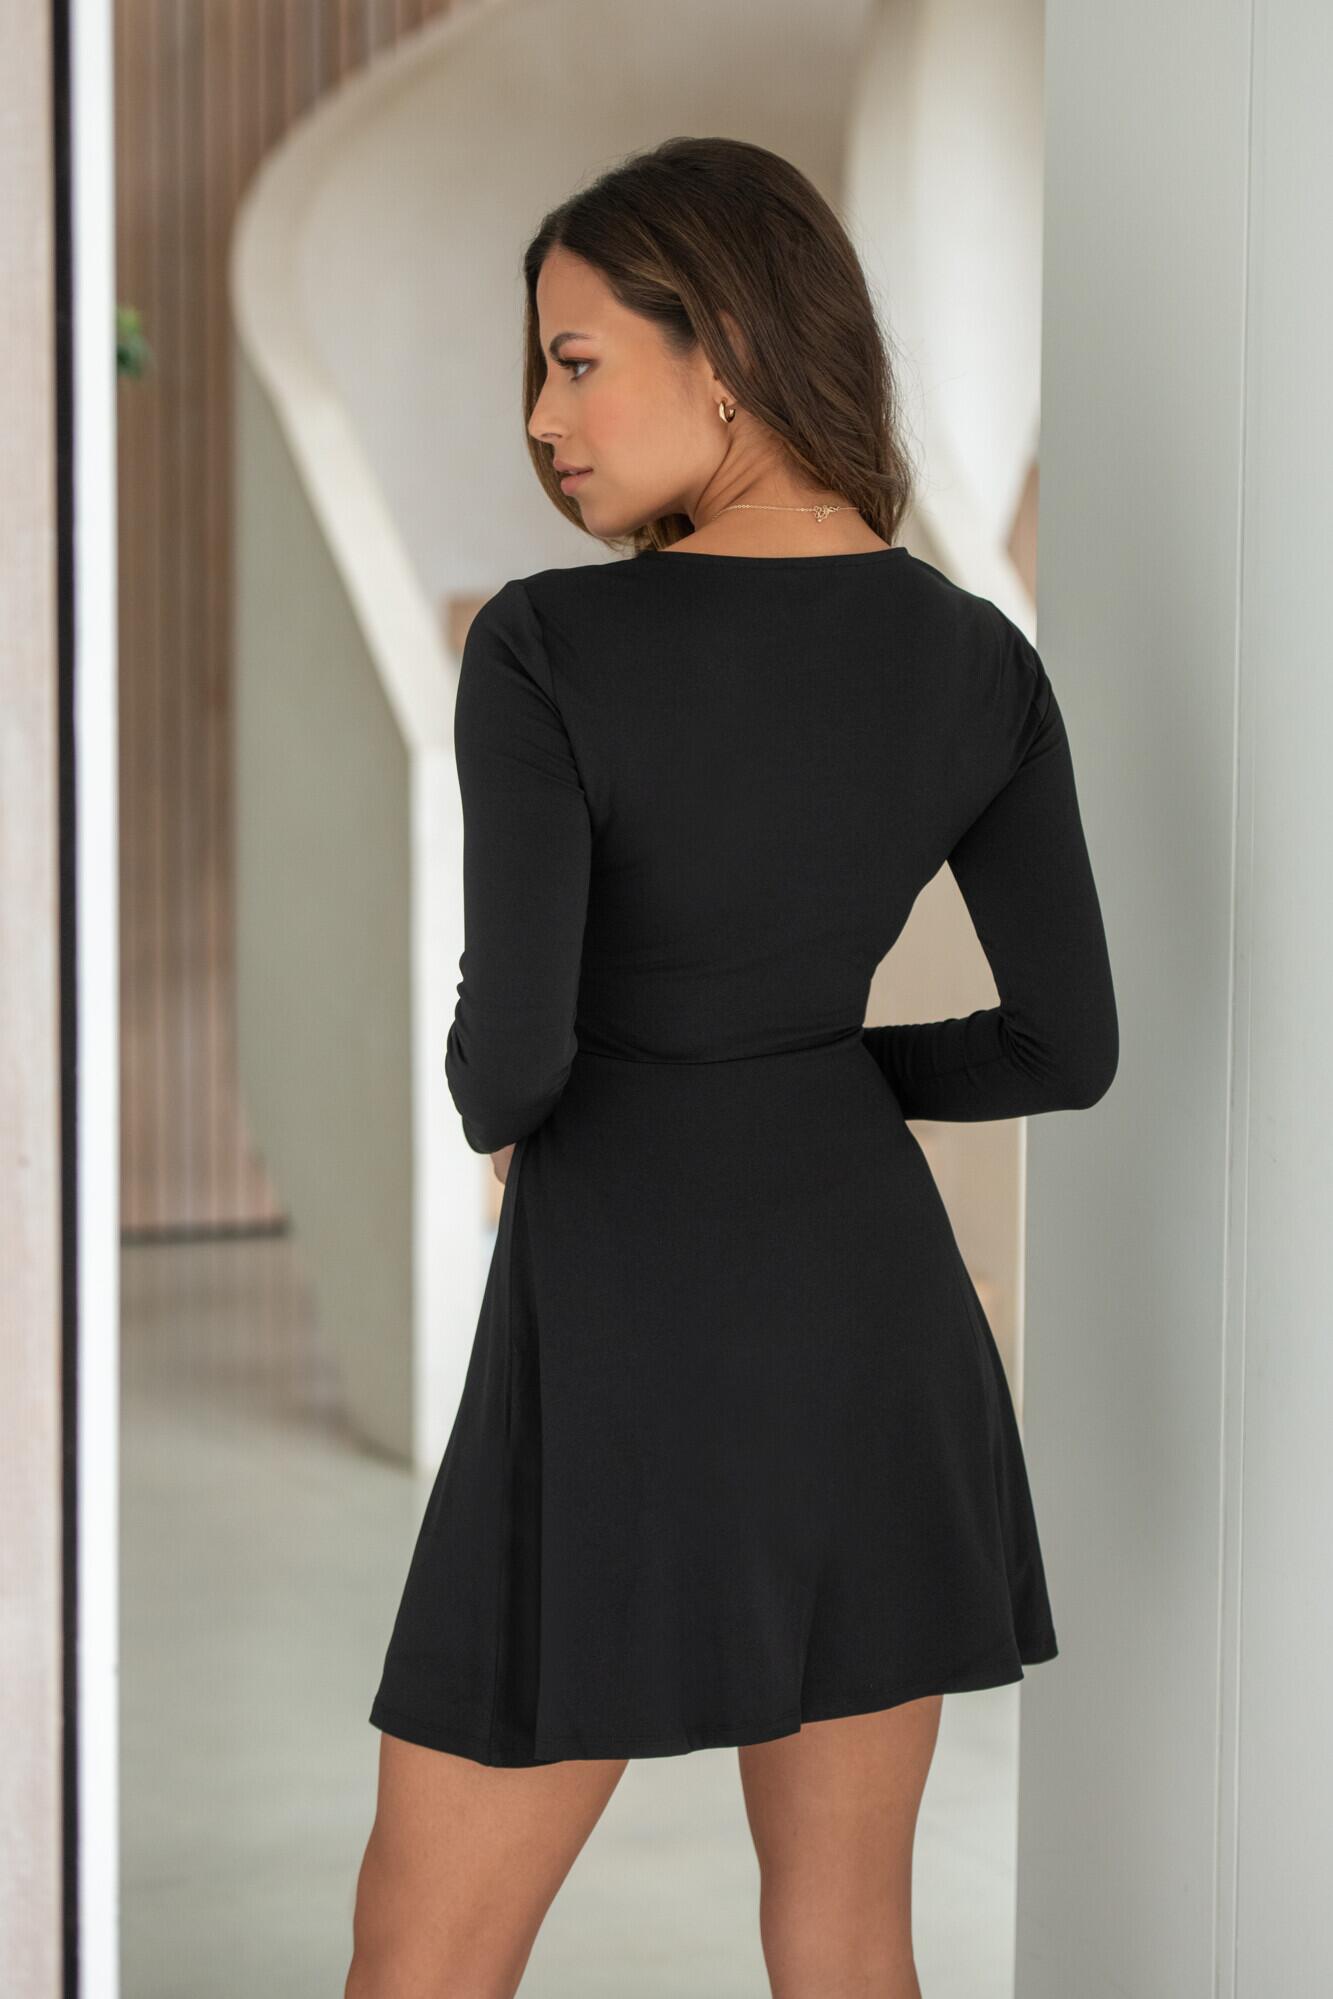 Buy SHEIN Women's Solid Square Neck Mini Skater Dress Black XL at Amazon.in